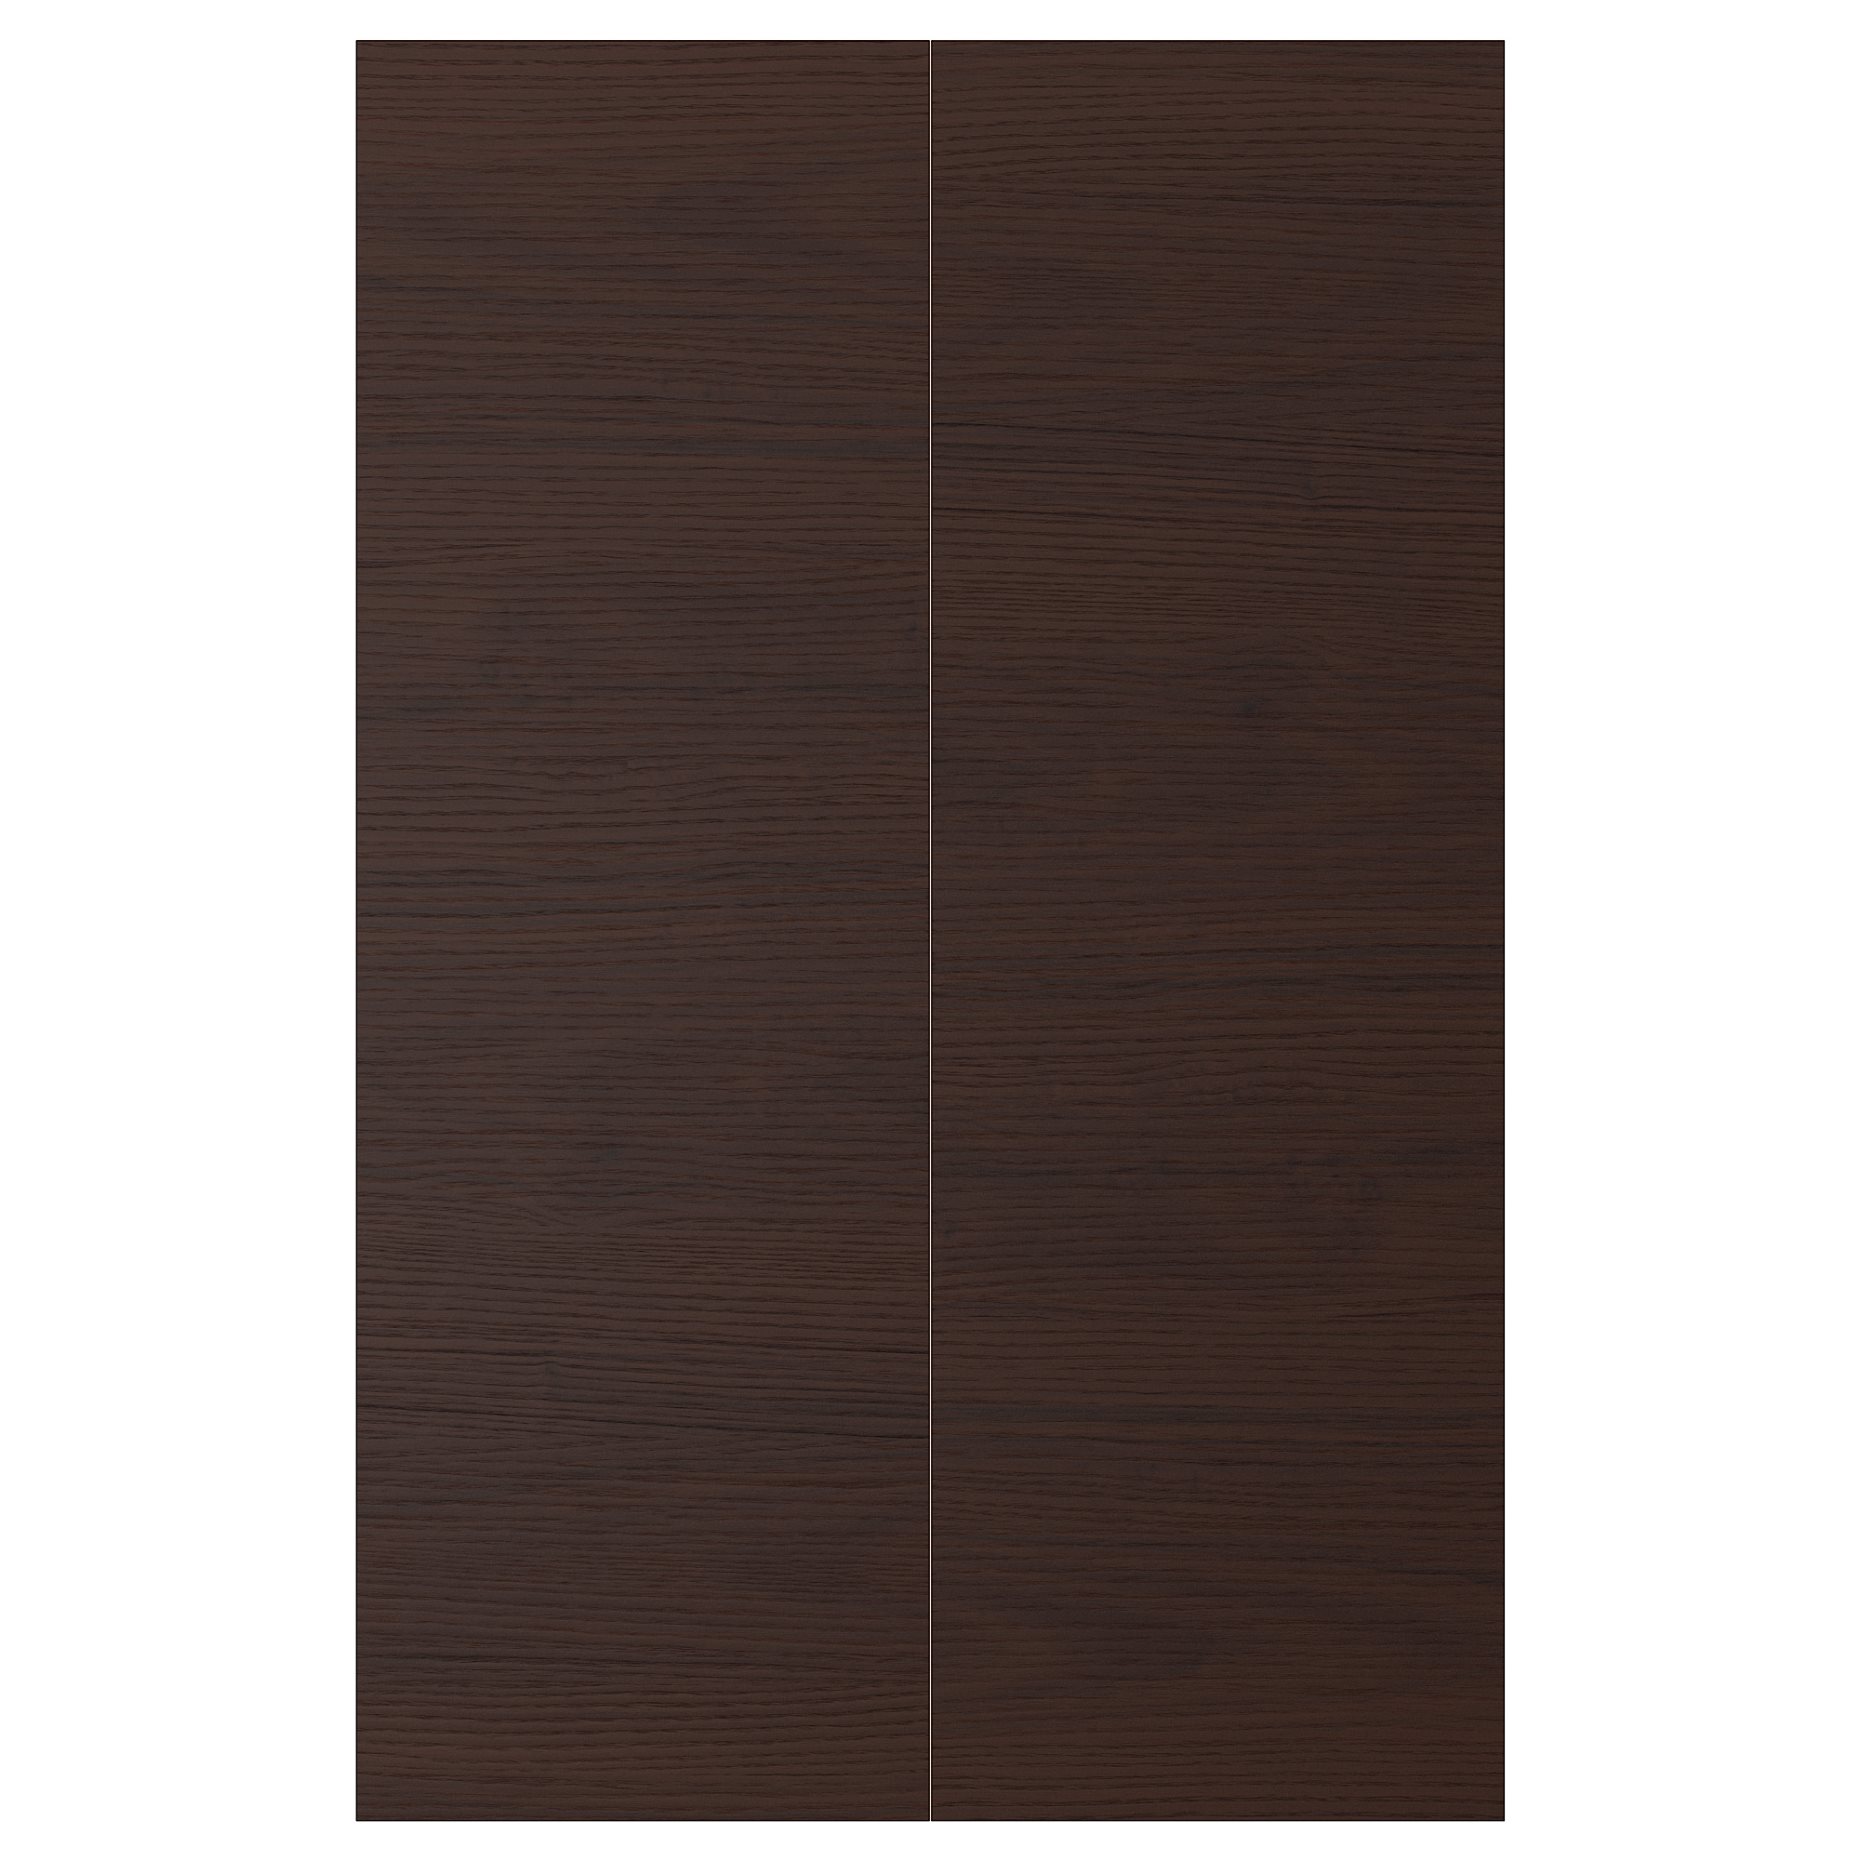 ASKERSUND, 2-piece door for corner base cabinet set, 25x80 cm, 704.252.55